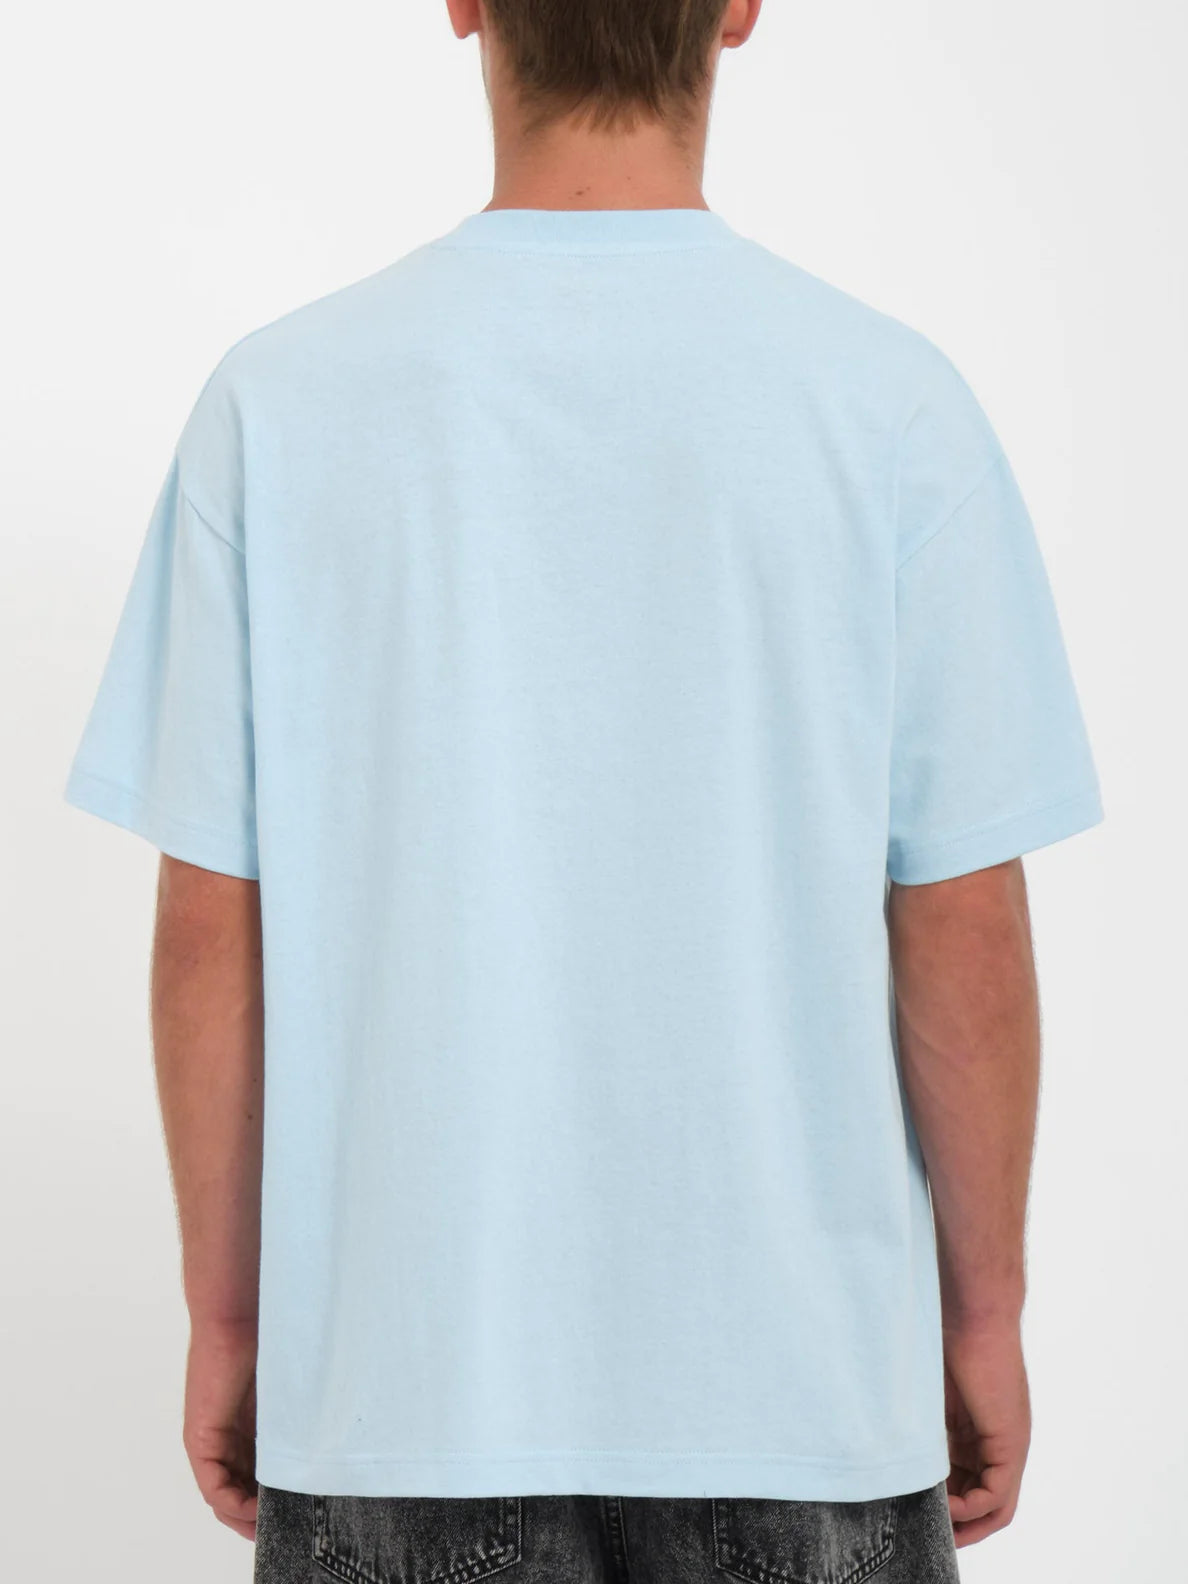 Camiseta Volcom Ripple Stone - Misty Blue